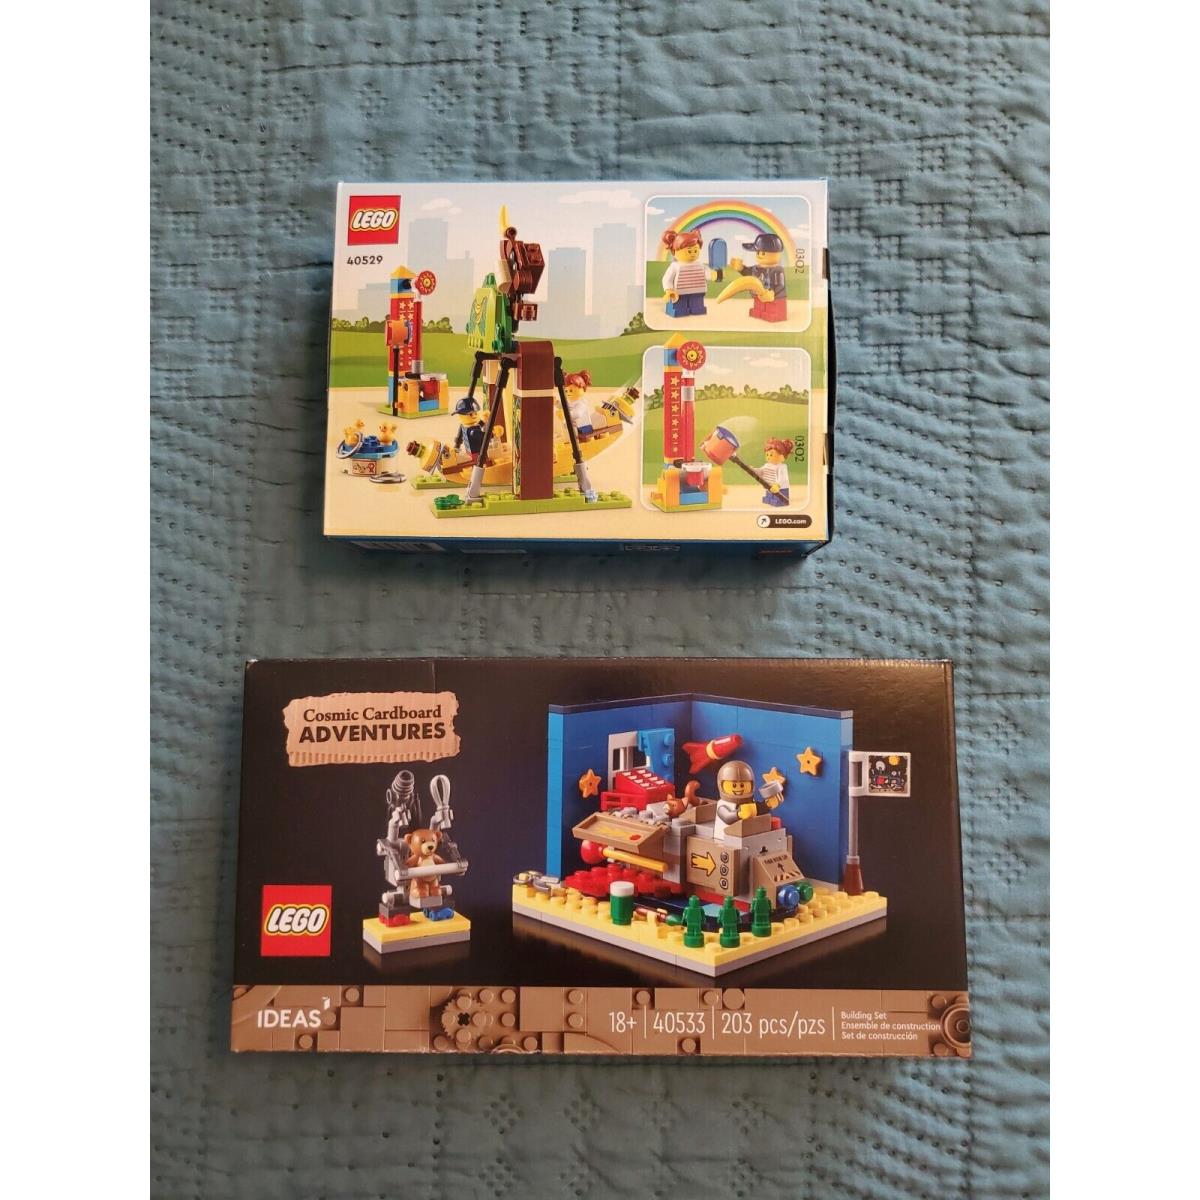 Lego Promo Sets 40533 and 40529 Cosmic Cardboard Adventures Amusement Park